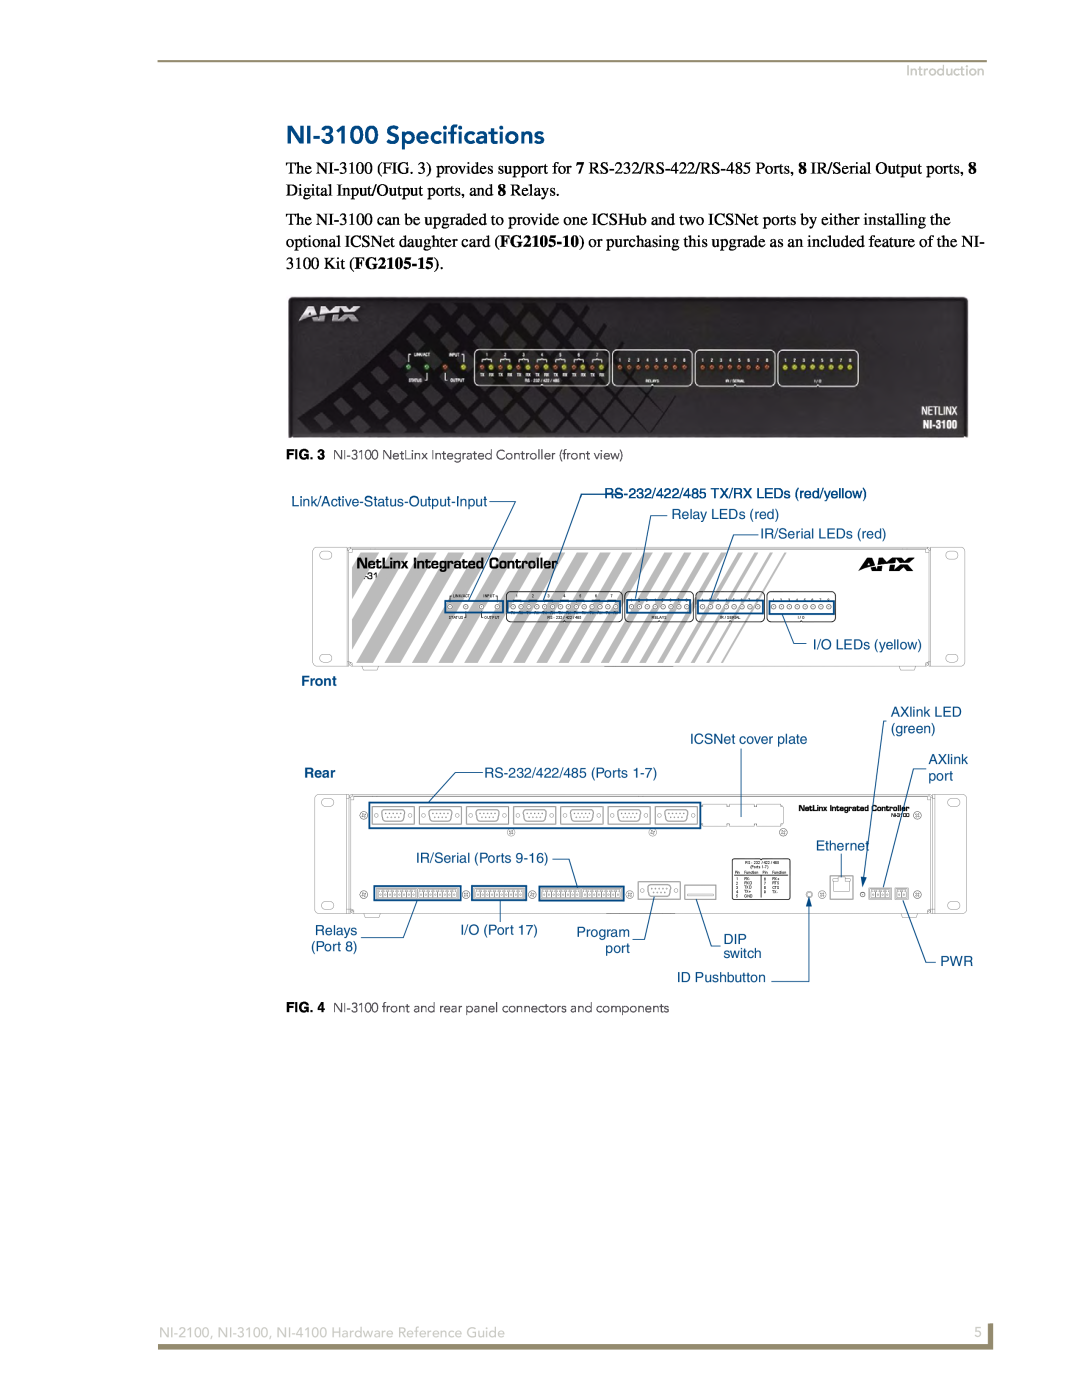 AMX NI-4100, NI-2100 manual NI-3100 Specifications, NI-3100 NetLinx Integrated Controller front view 